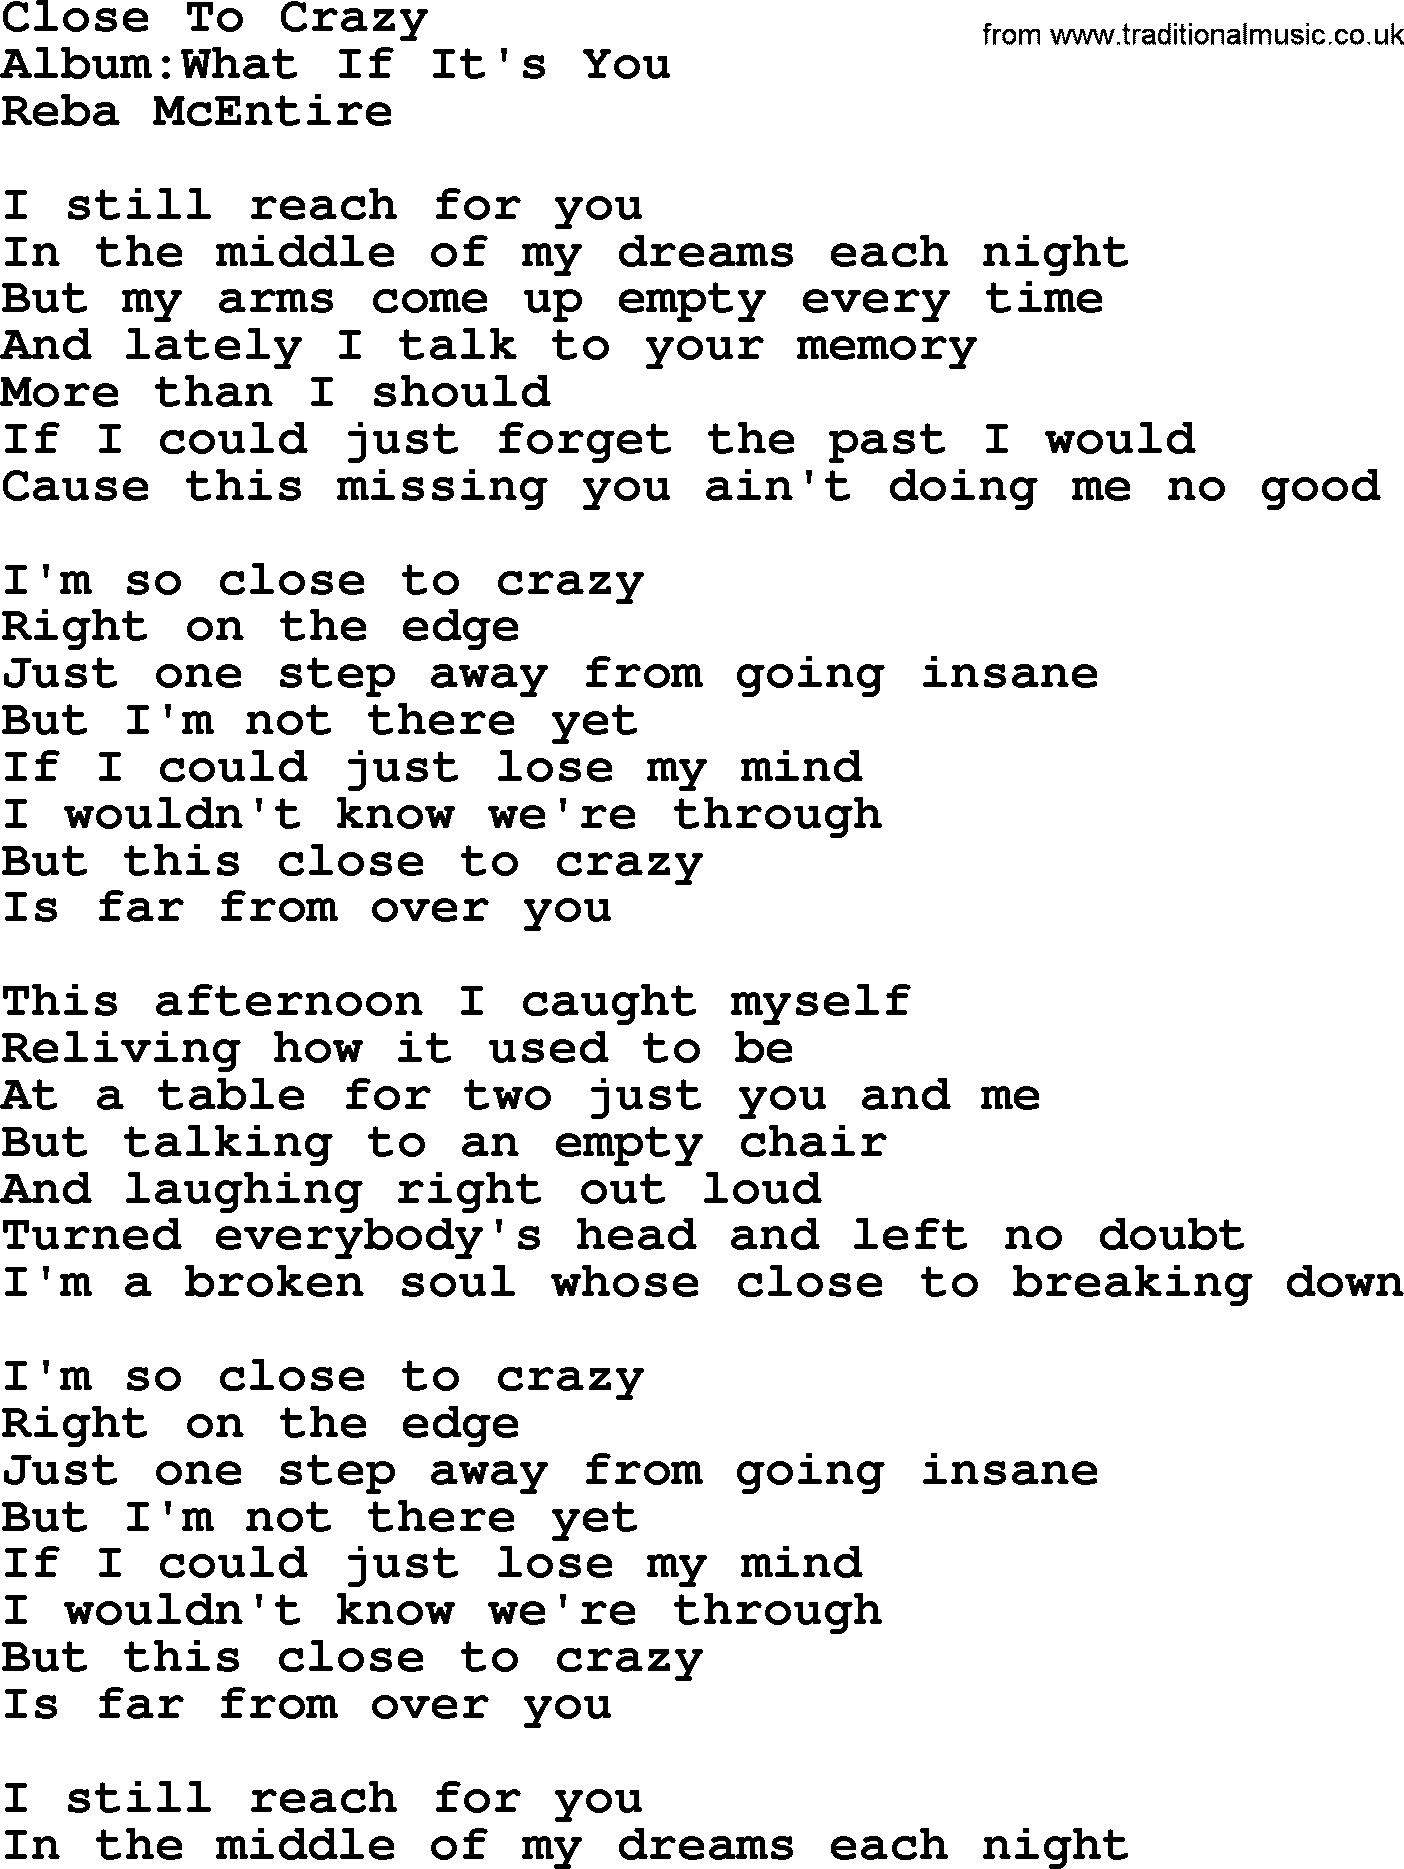 Reba McEntire song: Close To Crazy lyrics